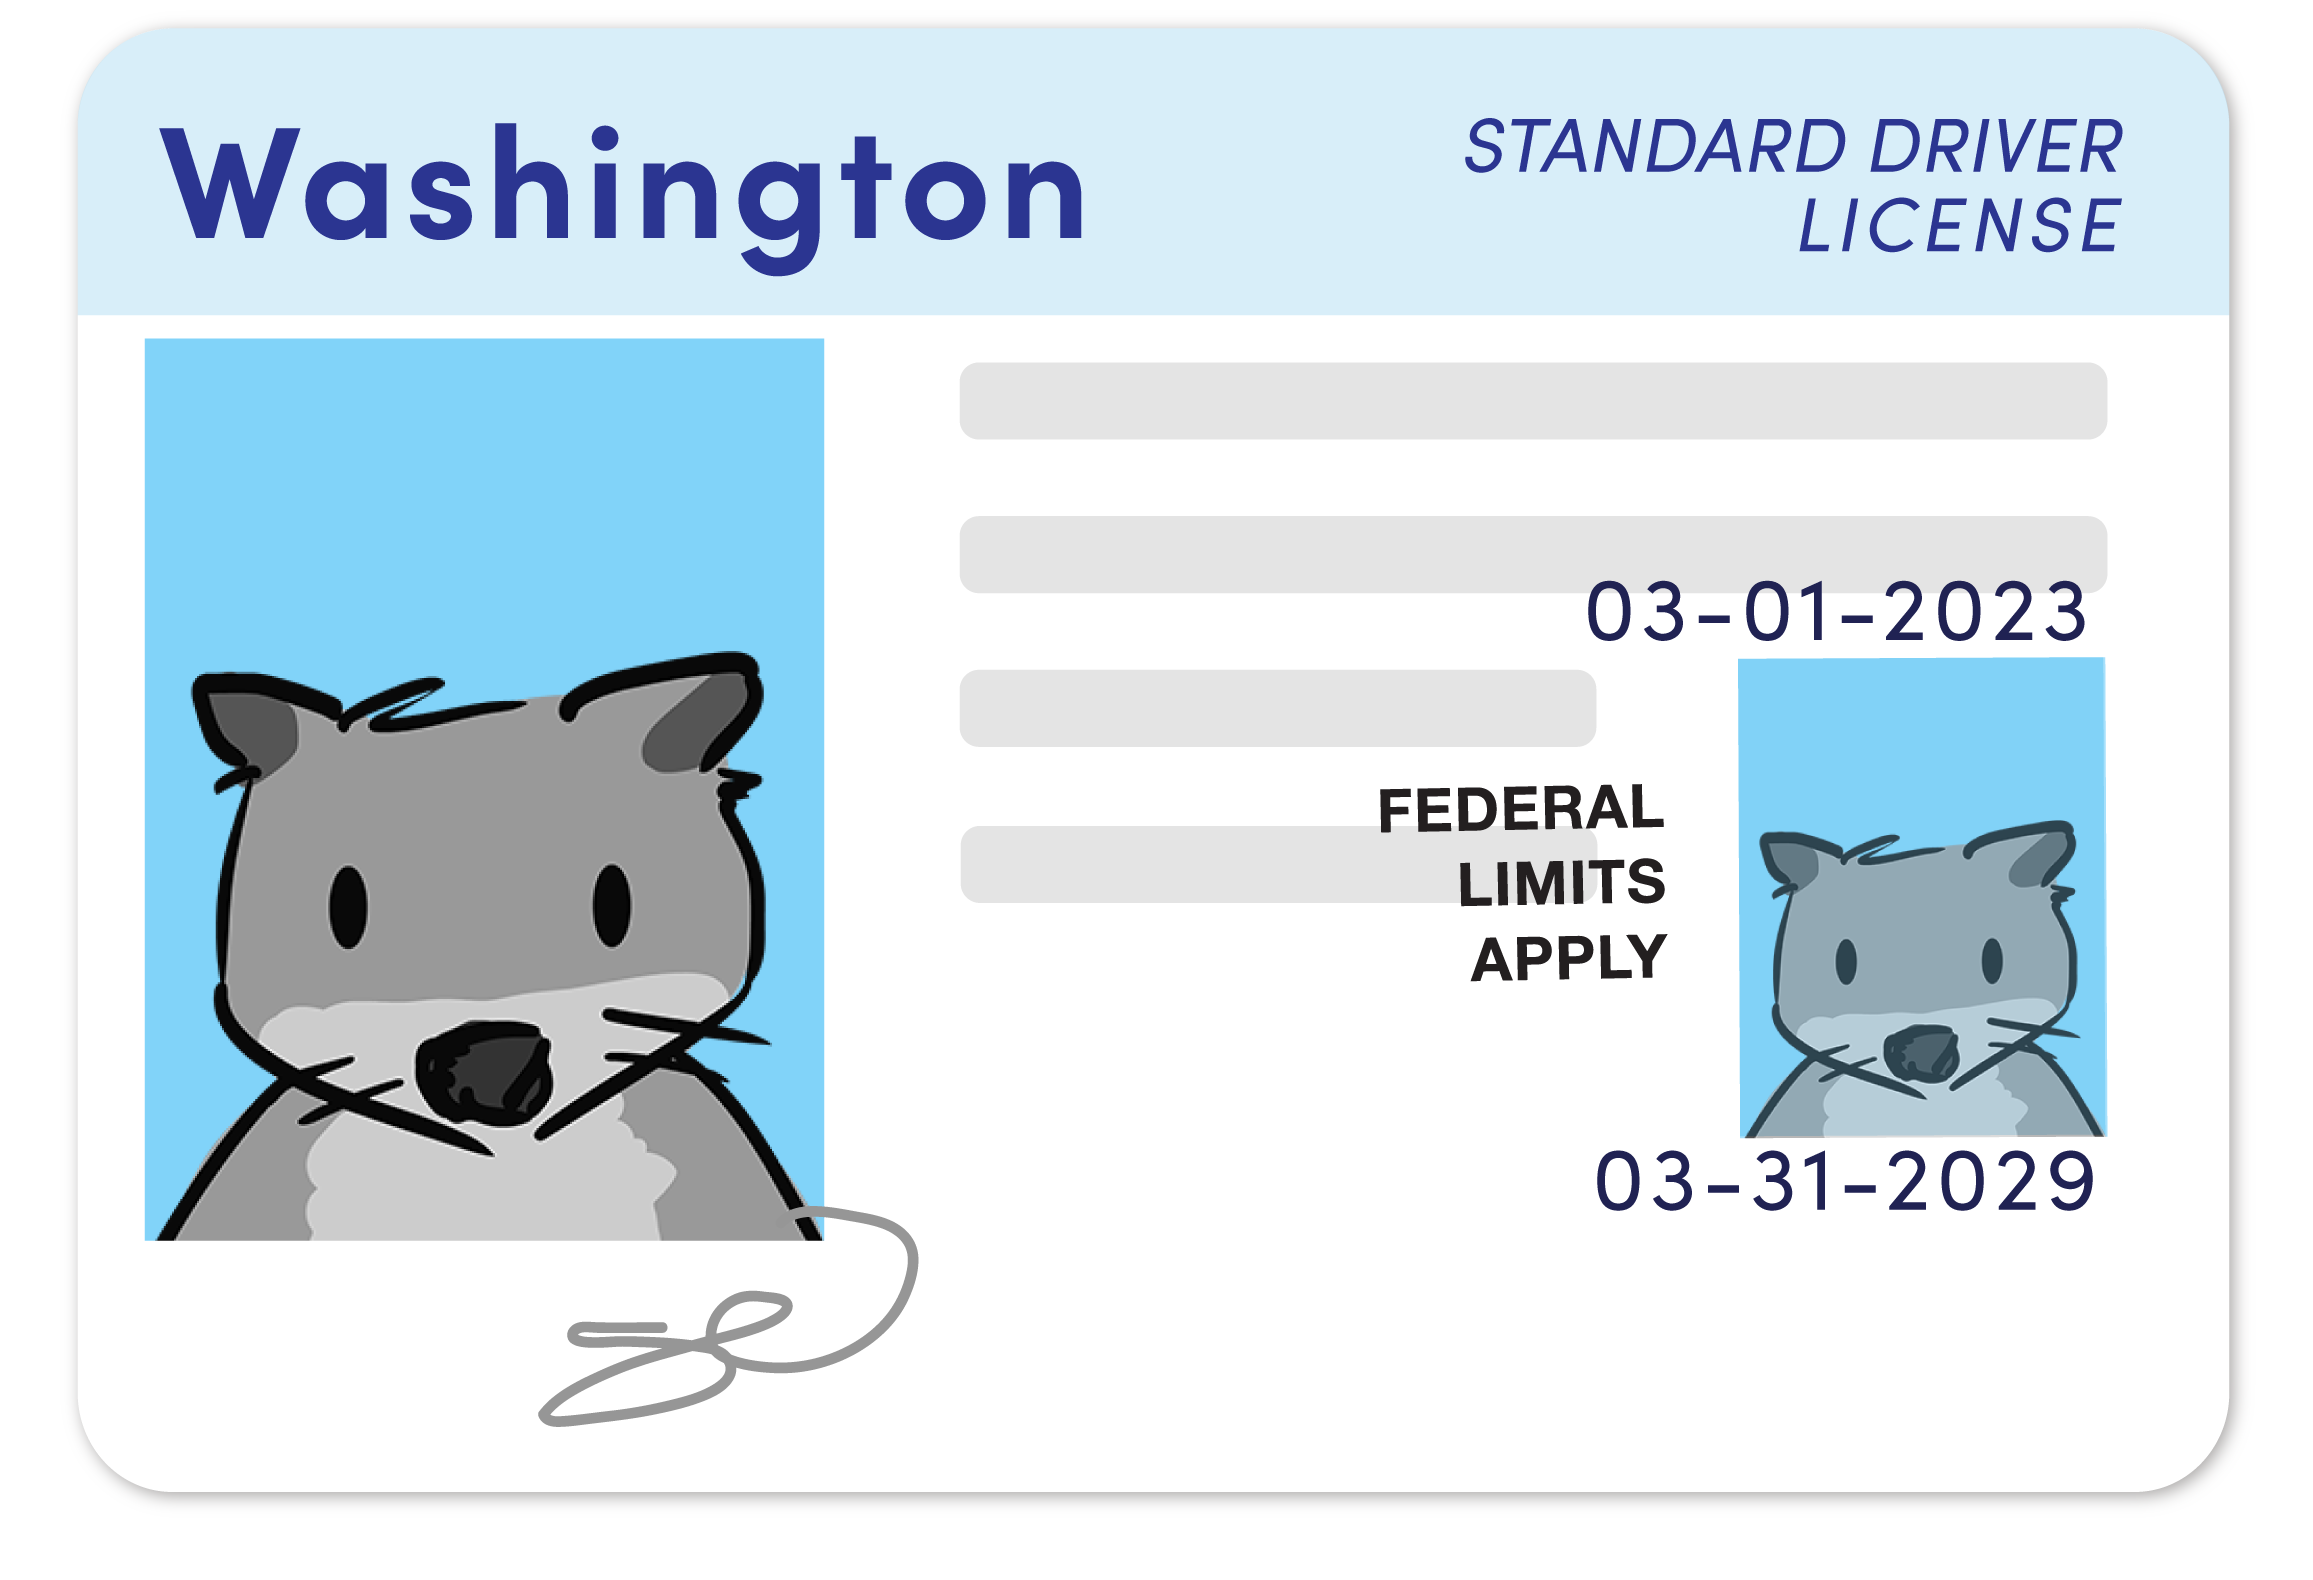 Illustration of a standard driver's license